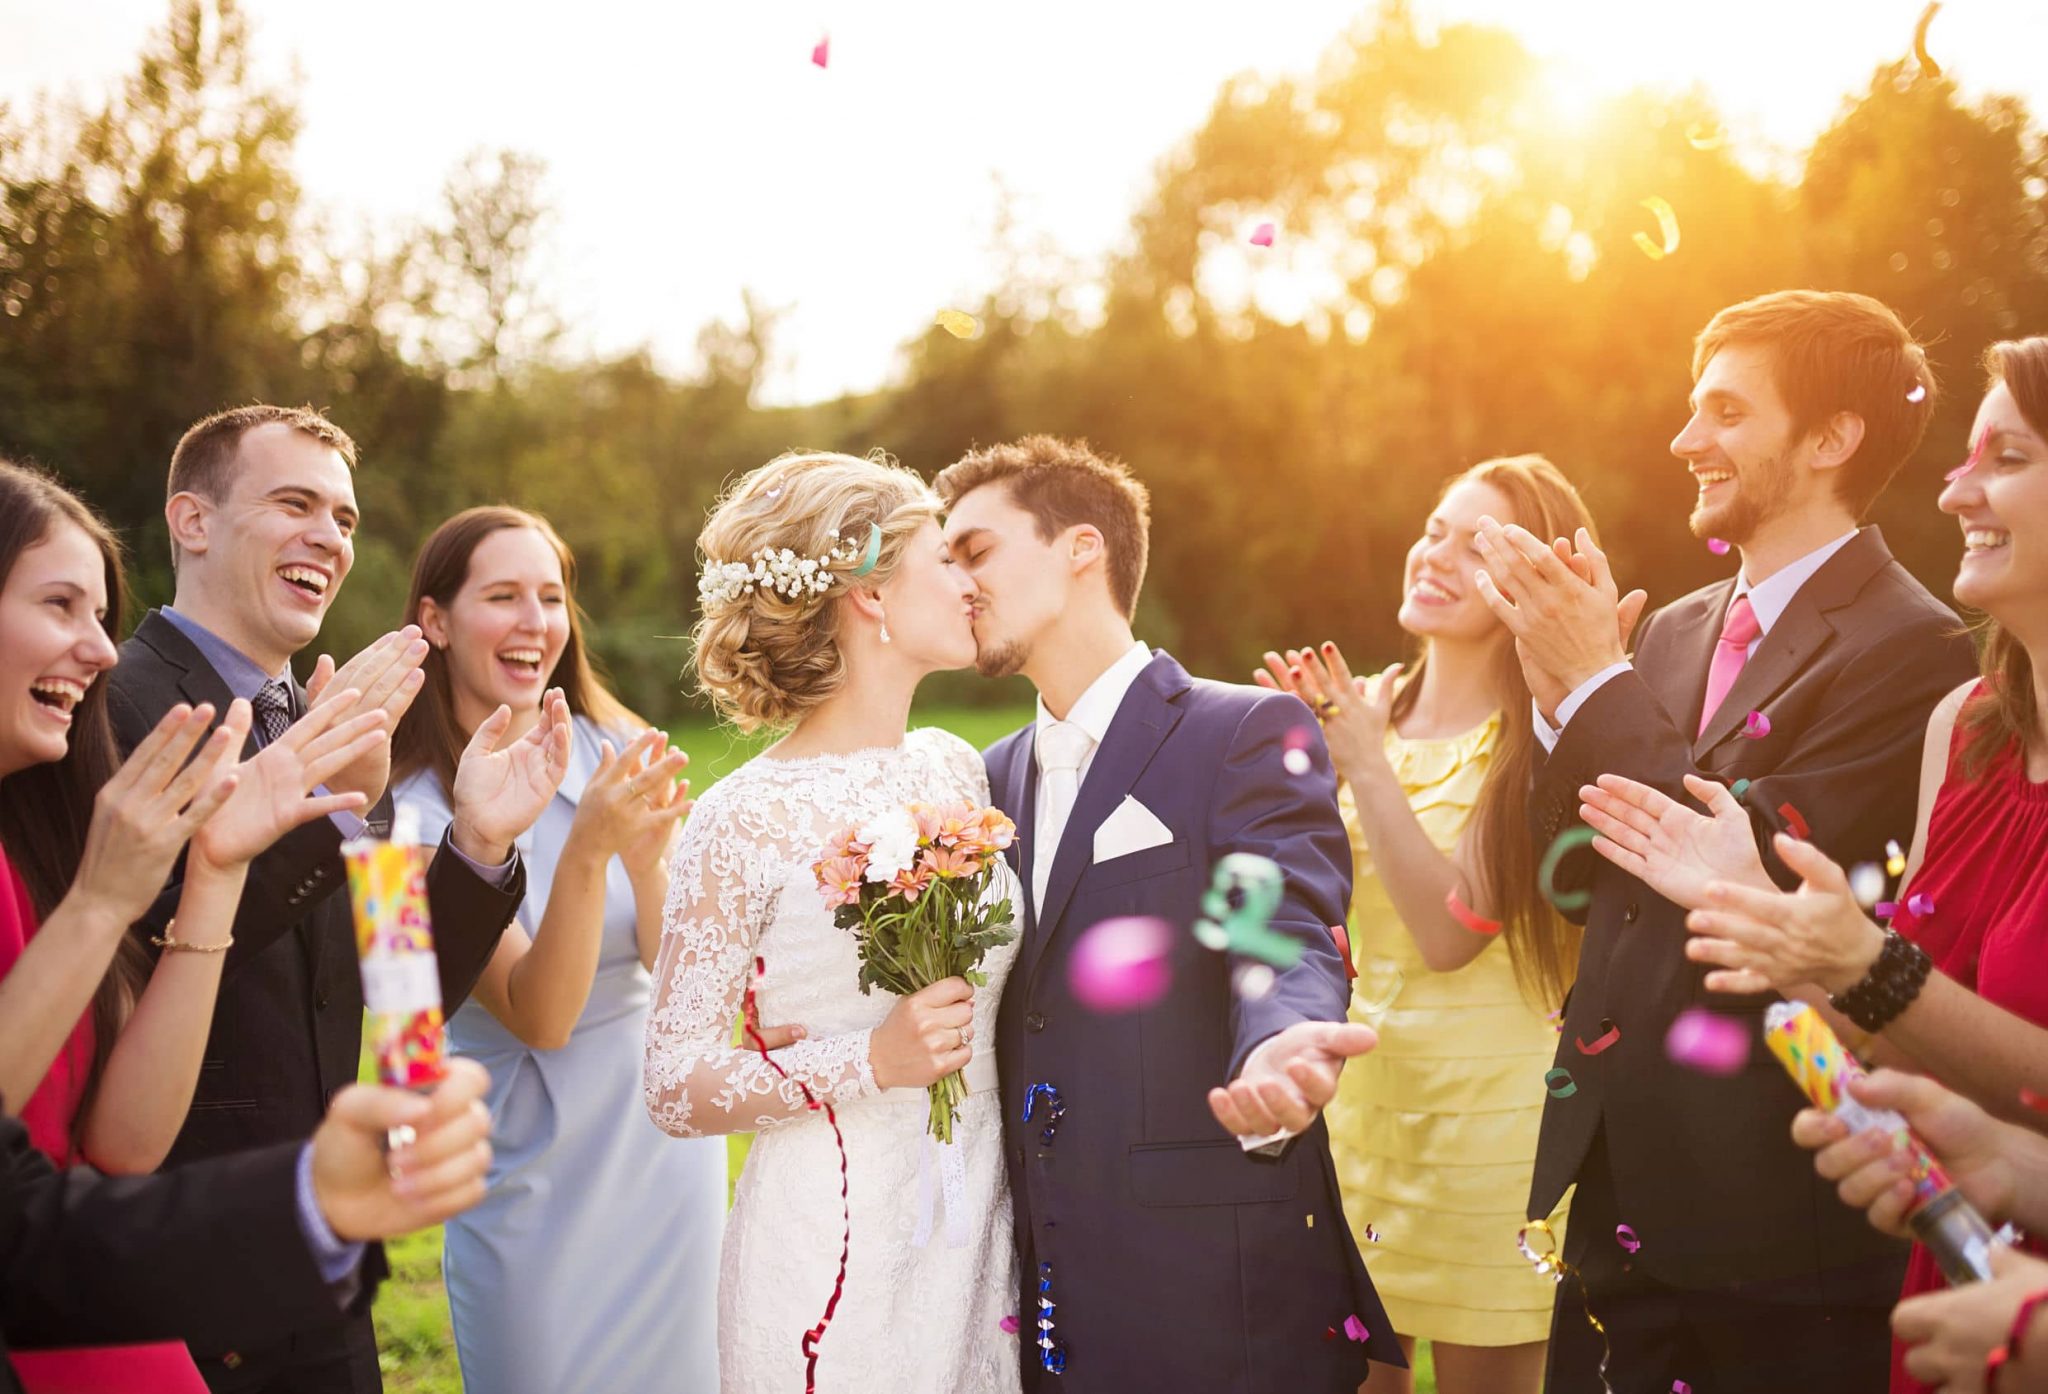 Organiser son mariage : une fête réussie